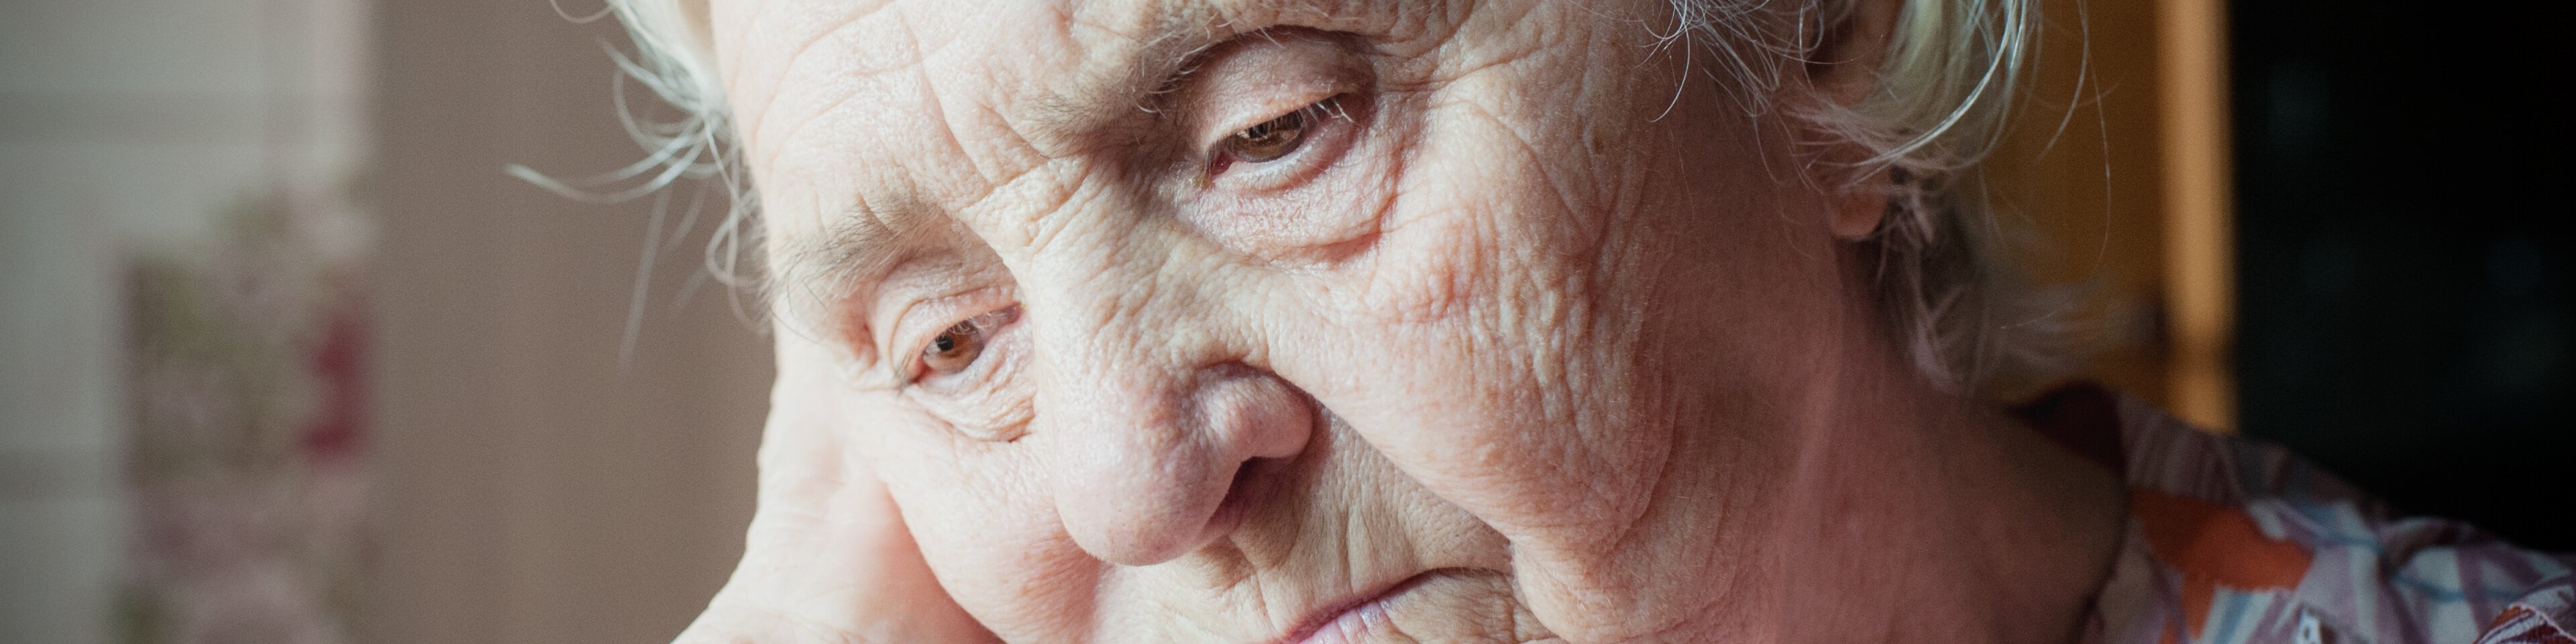 Eine ältere Frau schaut nachdenklich | © Nadia Cruzova - Fotolia